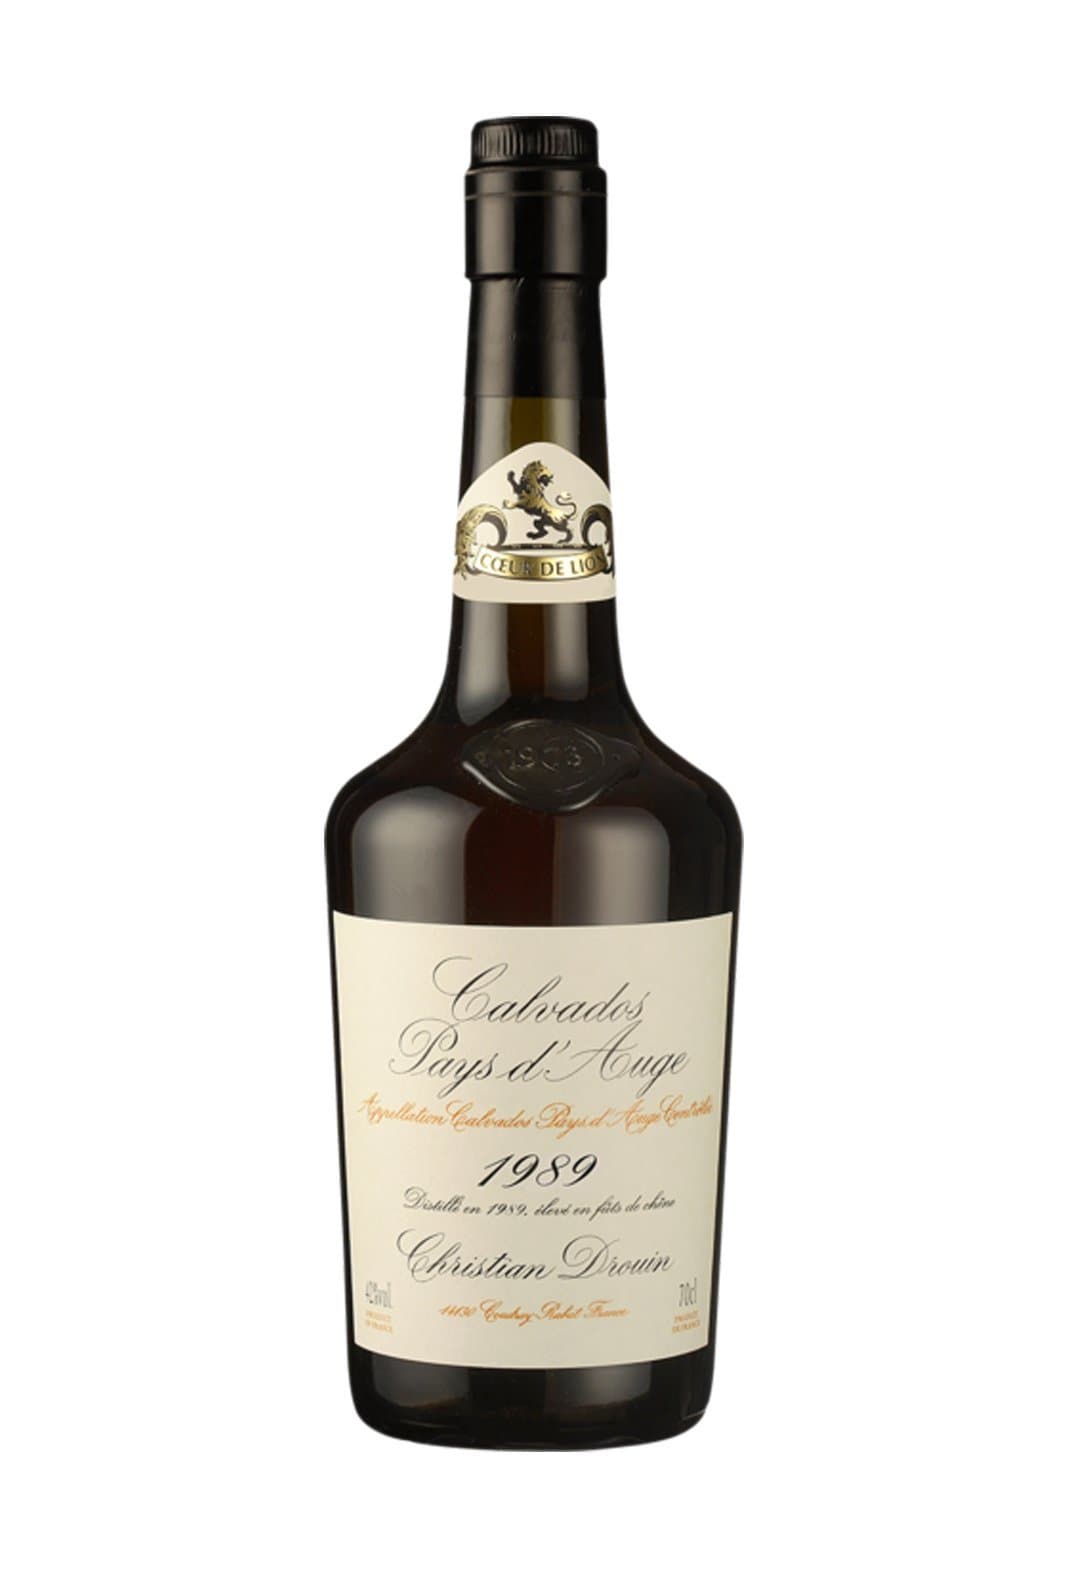 Christian Drouin Calvados 1989 Pays D'Auge Sherry cask 42% 700ml | Brandy | Shop online at Spirits of France